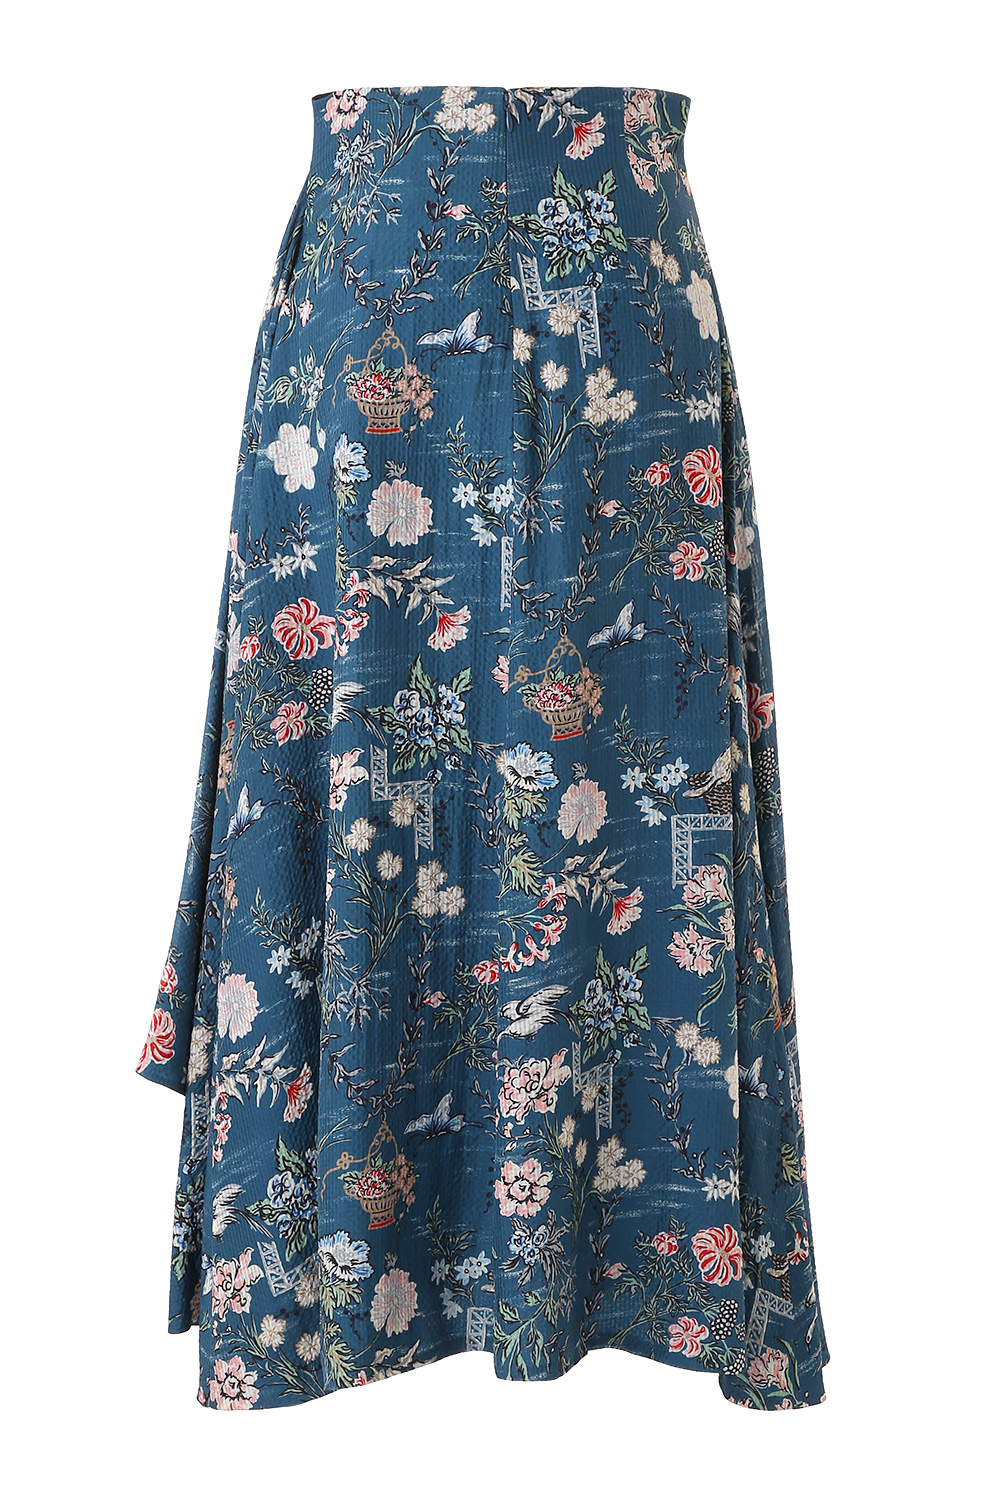 VintageWall スカート 詳細画像 サックス 3